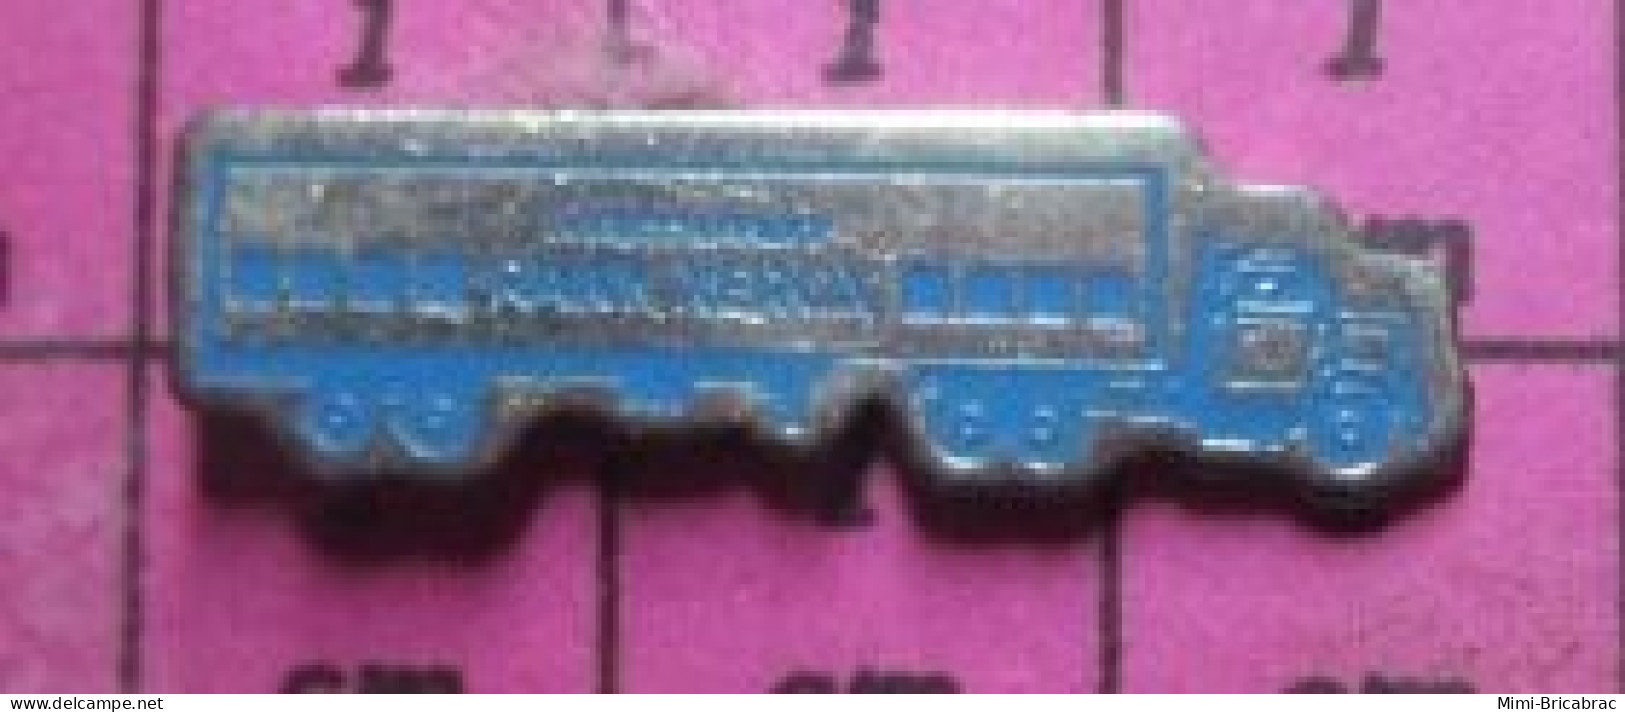 820 Pins Pin's / Rare & Belle Qualité INFORMATIQUE / CAMION ROUTIER RANK XEROX - Computers